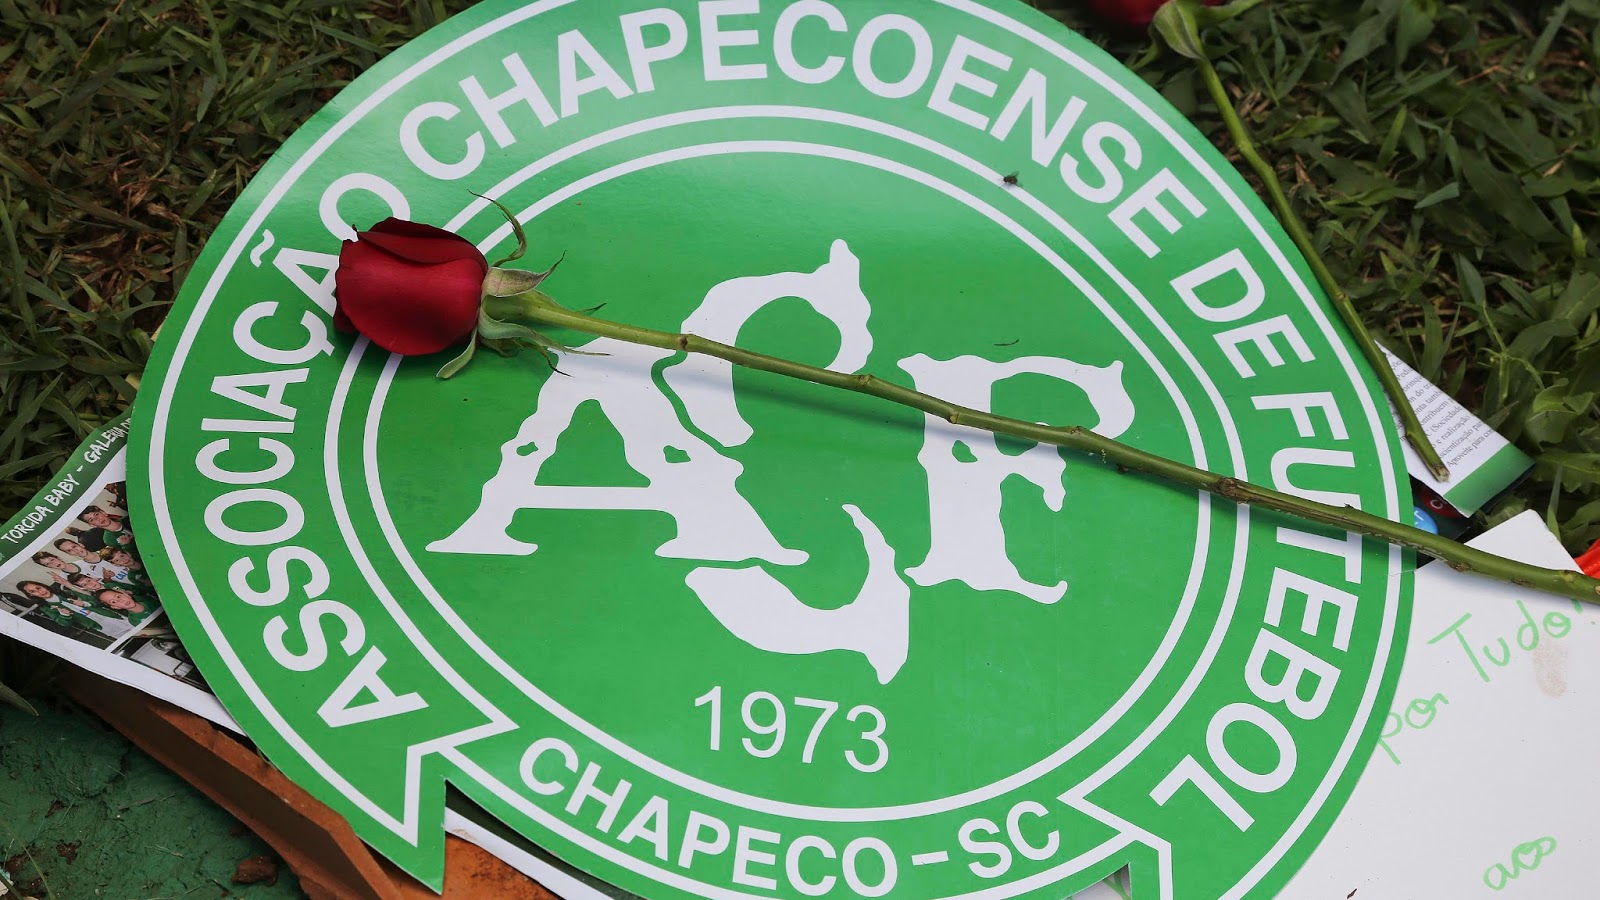 Chapecoense - Chapecoense Respect - HD Wallpaper 